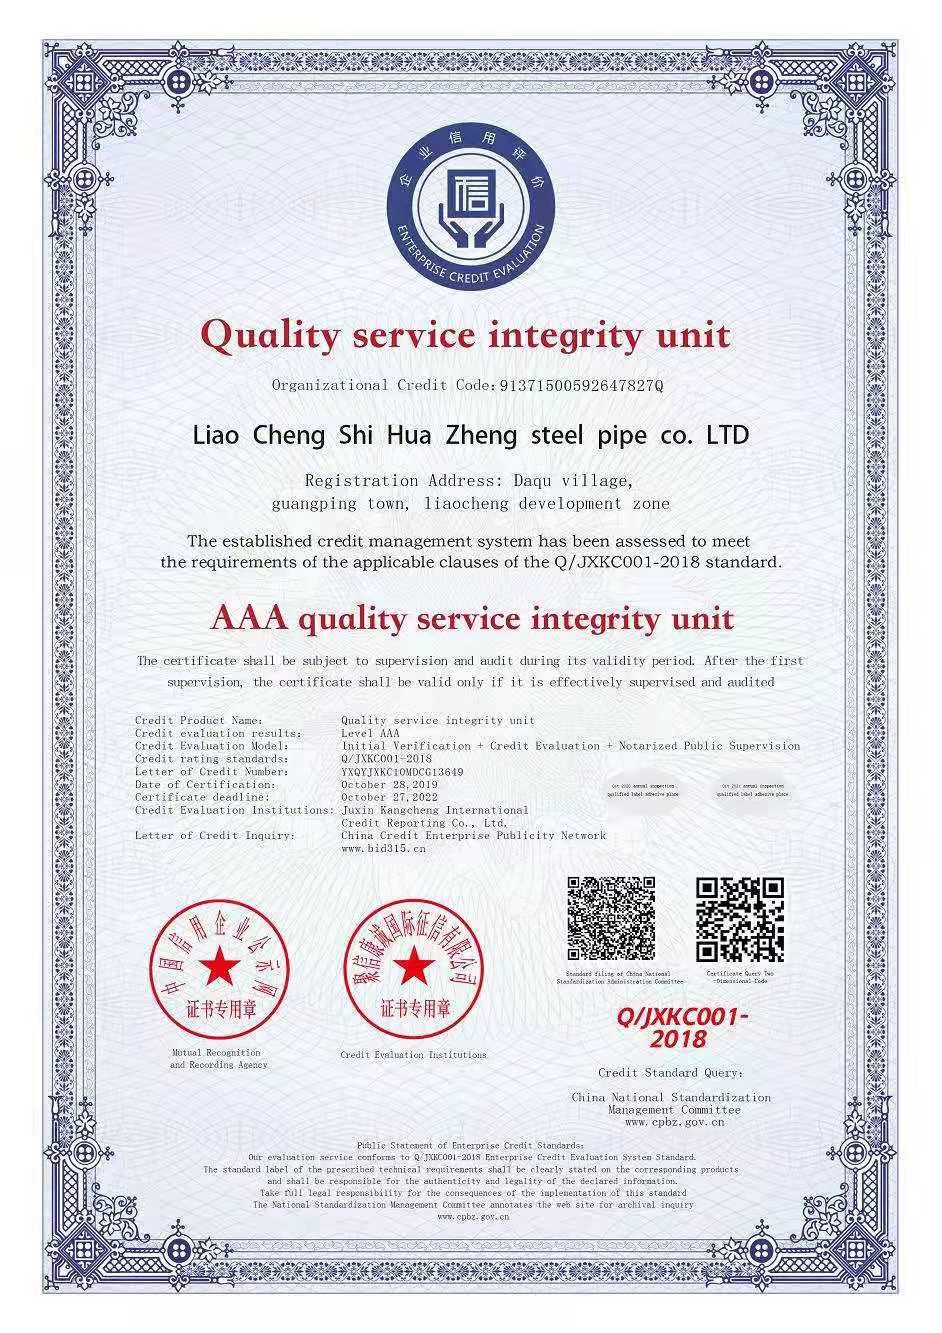 Liaocheng Huazheng Steel Pipe Co., Ltd. won AAA certification(圖1)